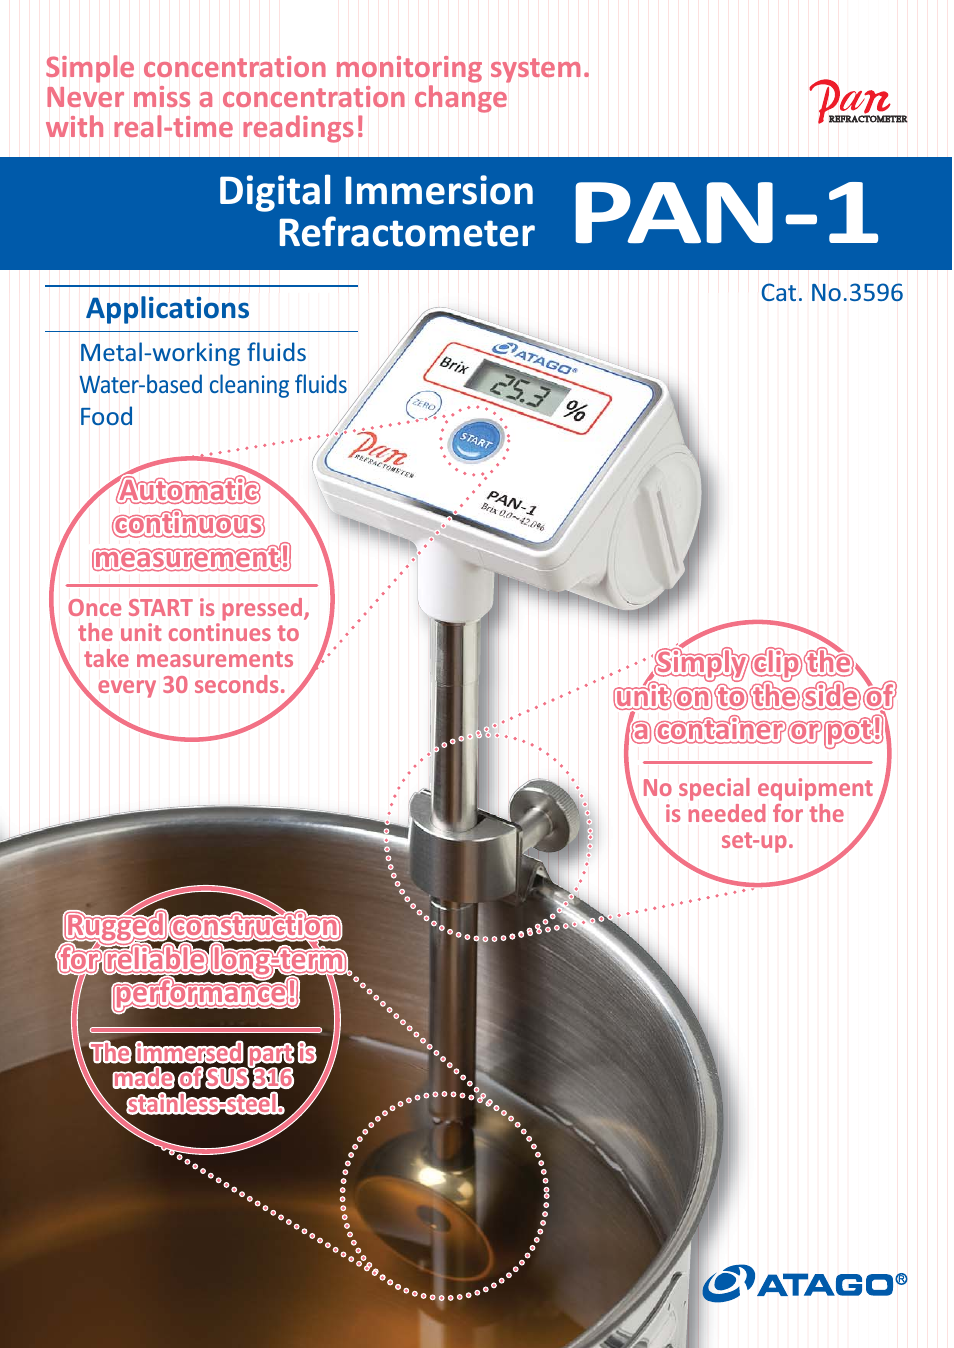 Atago PAN-1 Digital Immersion Refractometer